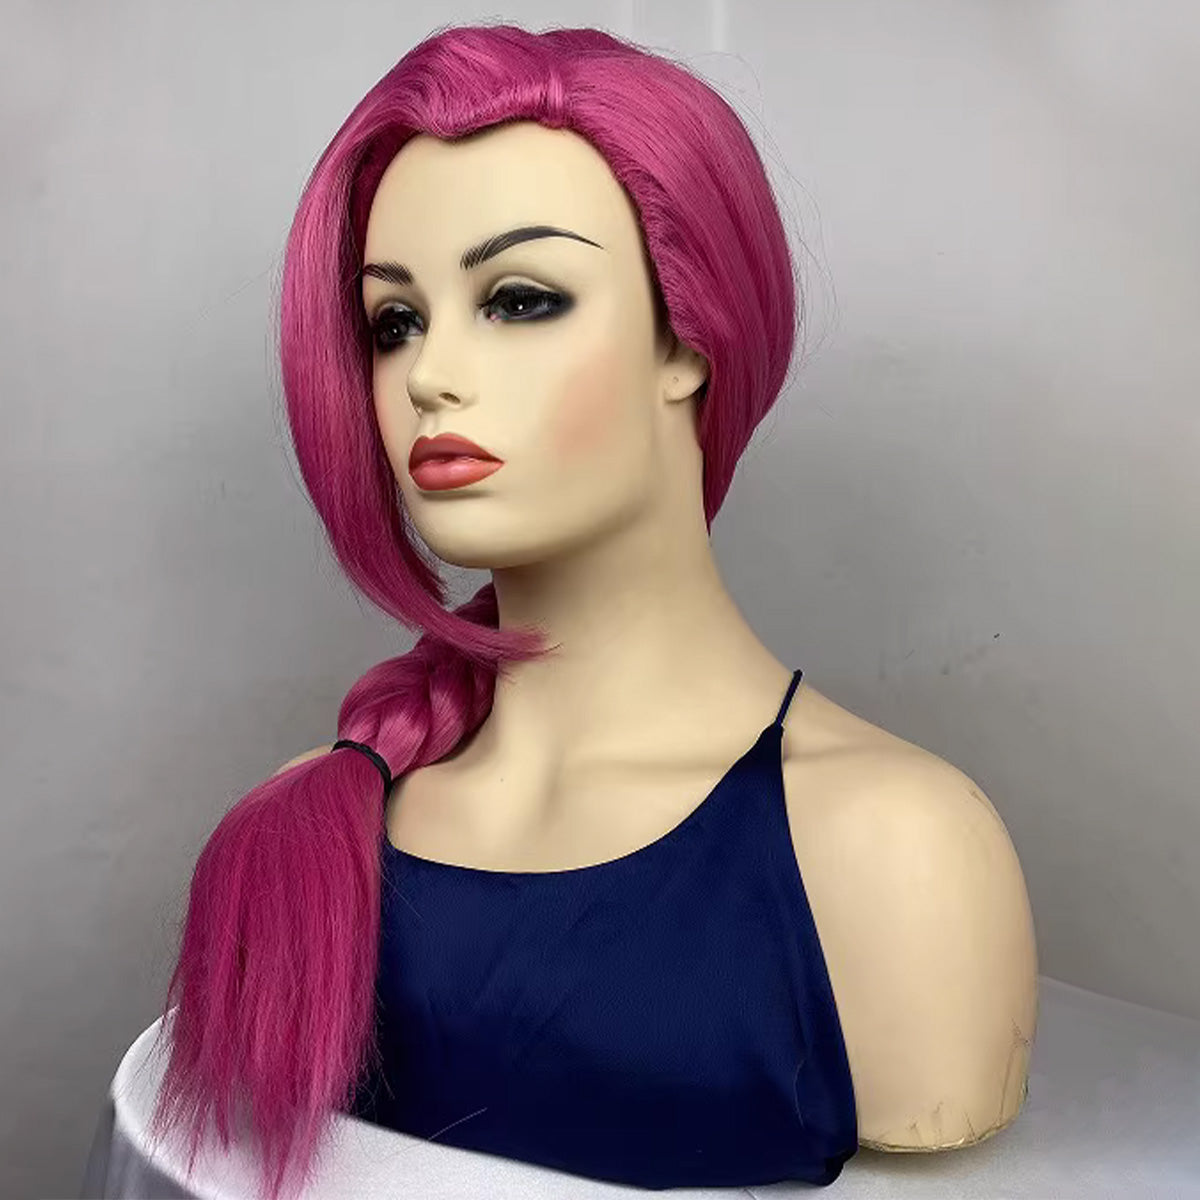 JoJo's Bizarre Adventure: Vento Aureo Golden Wind Vinegar Doppio Diavolo Pink Cosplay Wig